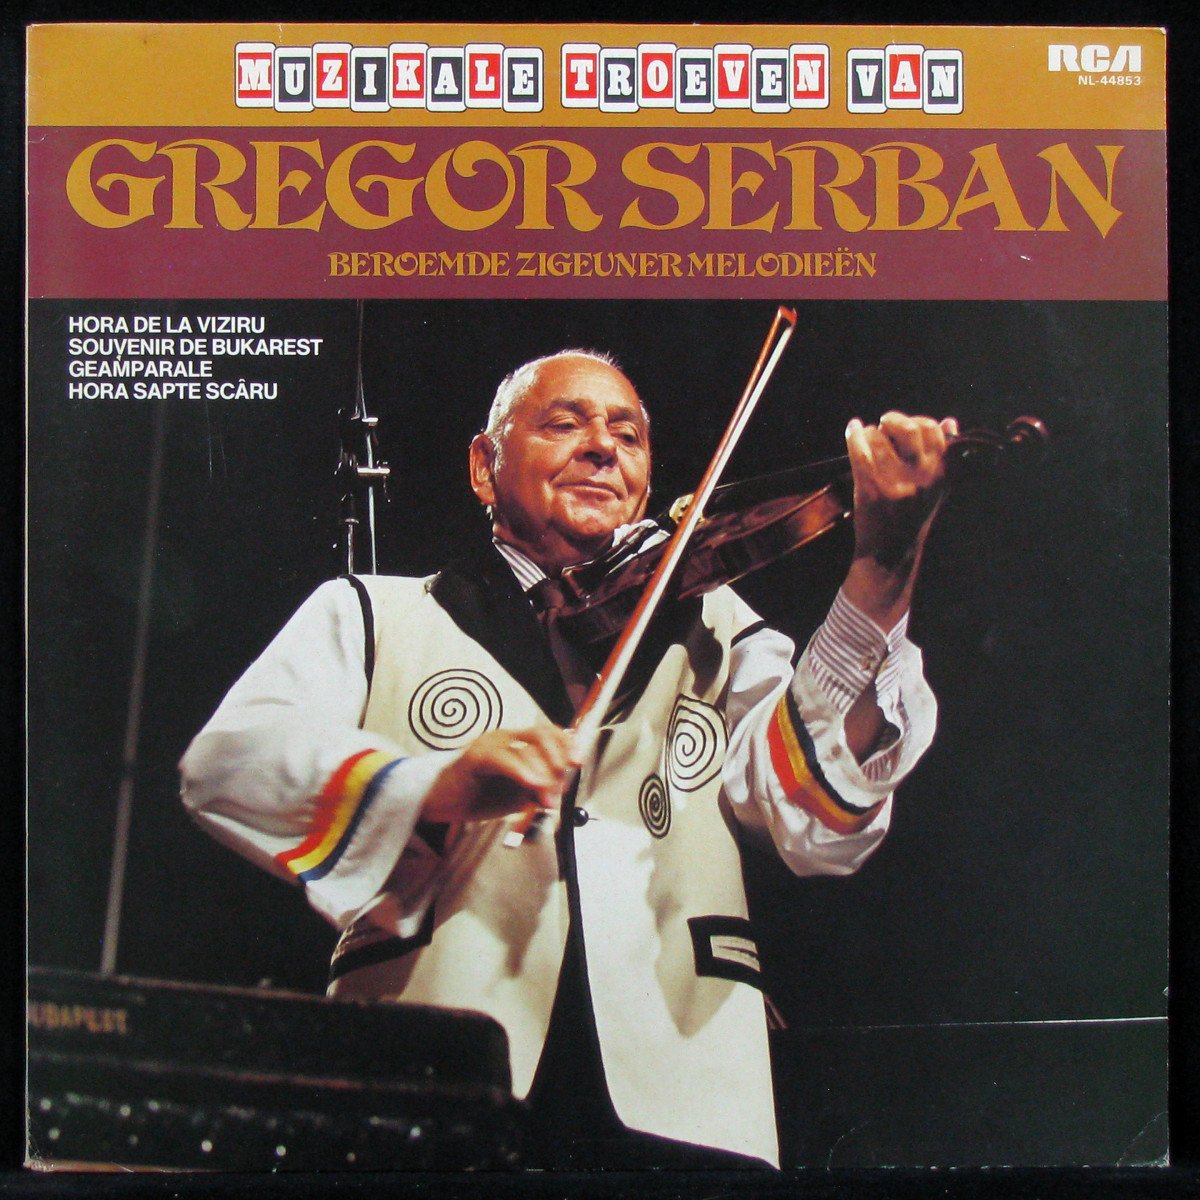 LP Gregor Serban — Musikale Troeven Van Gregor Serban фото